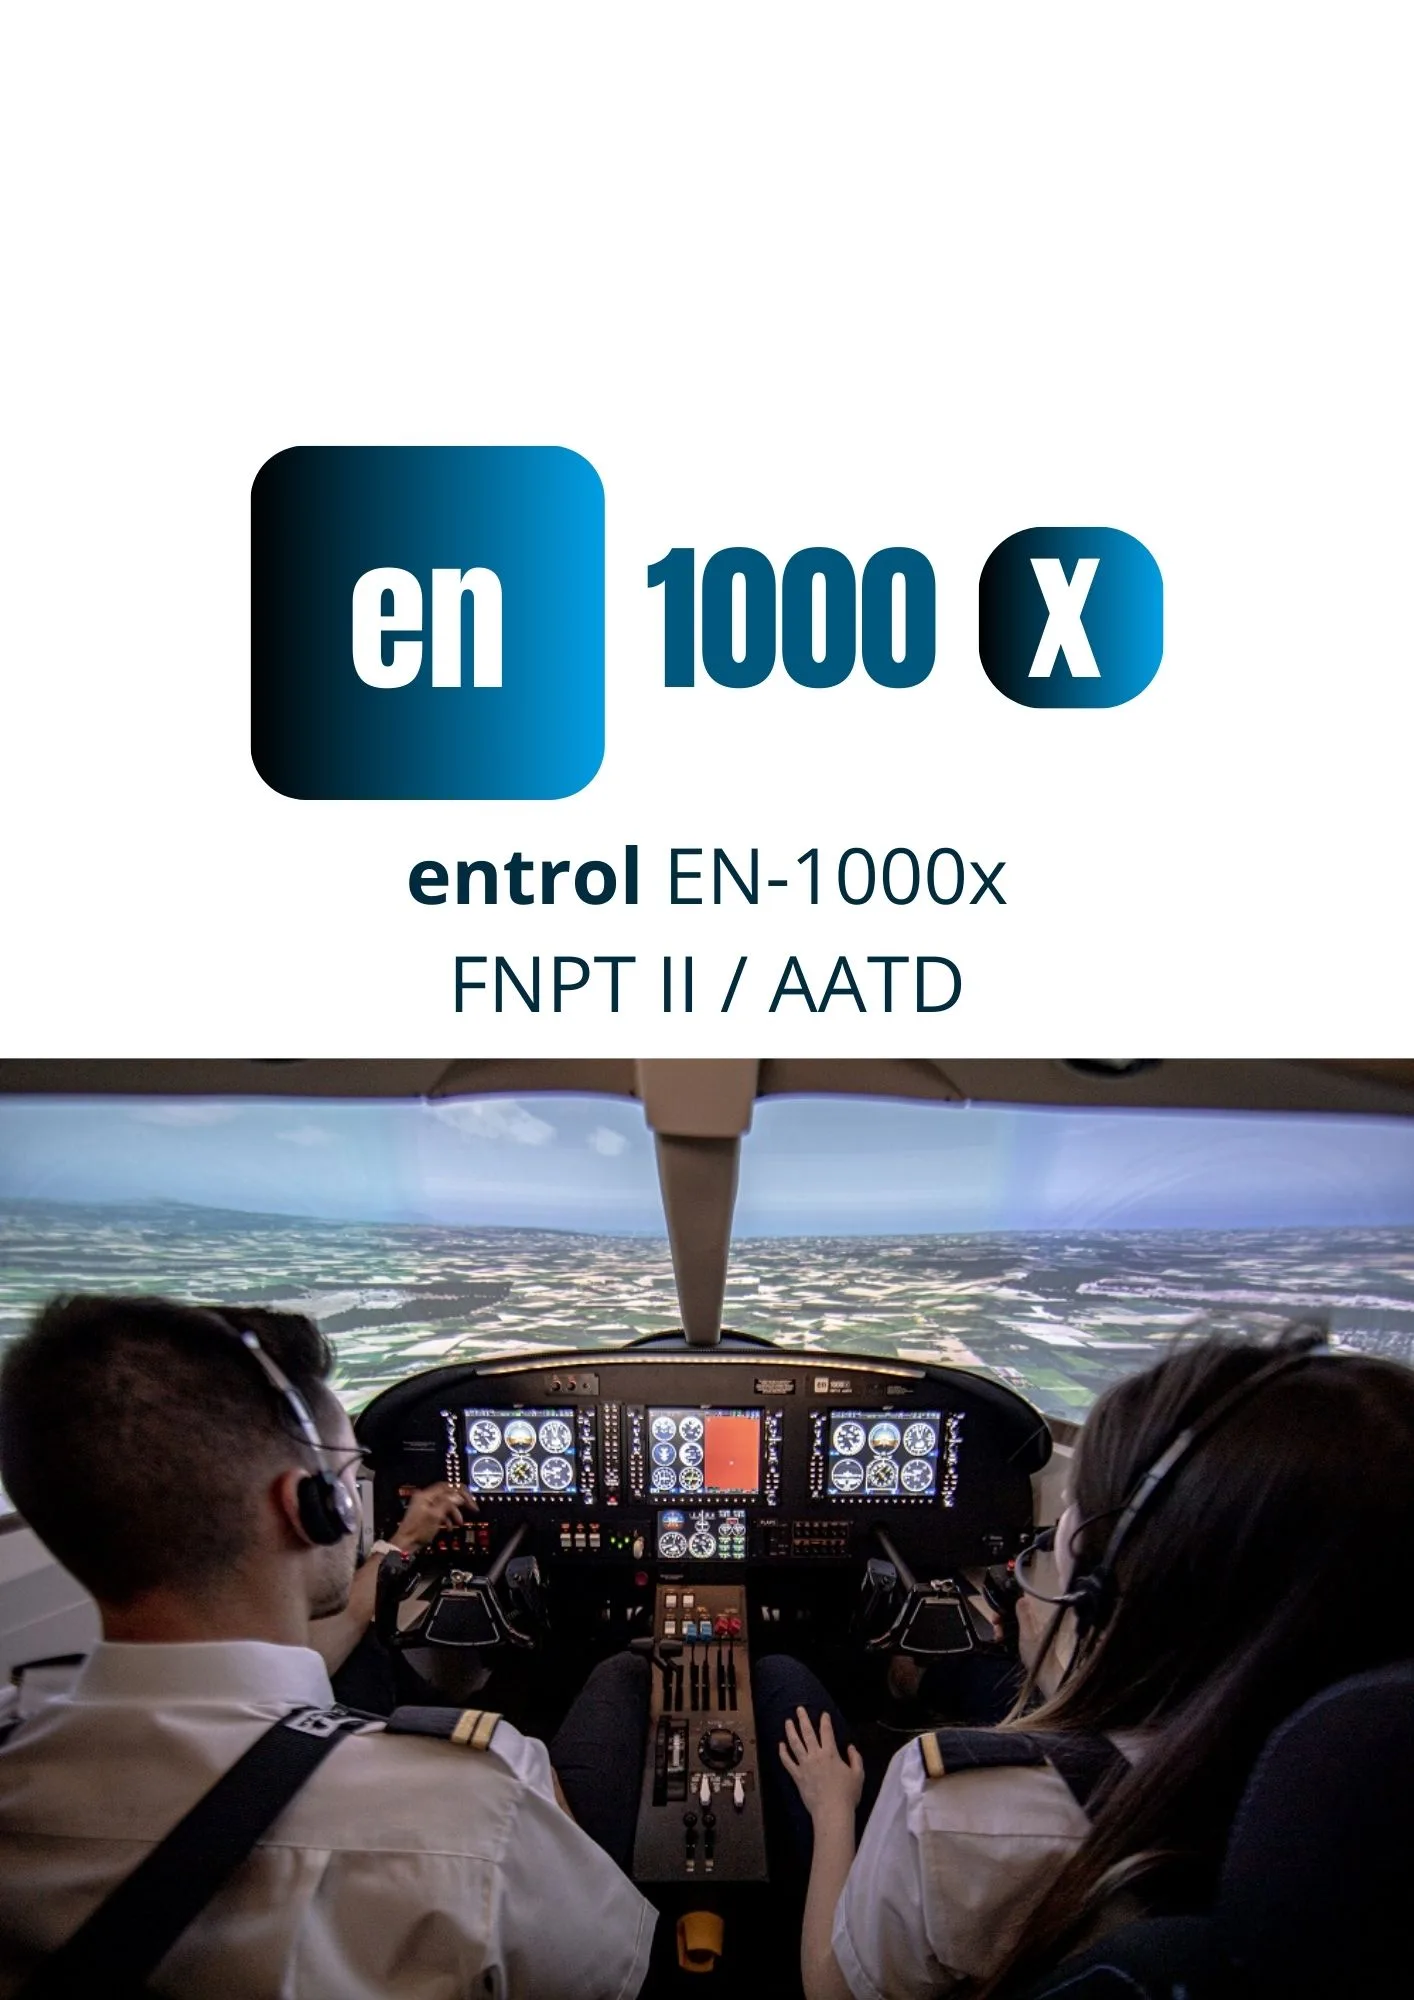 New entrol en-1000x FNPT II installed for Aerotec